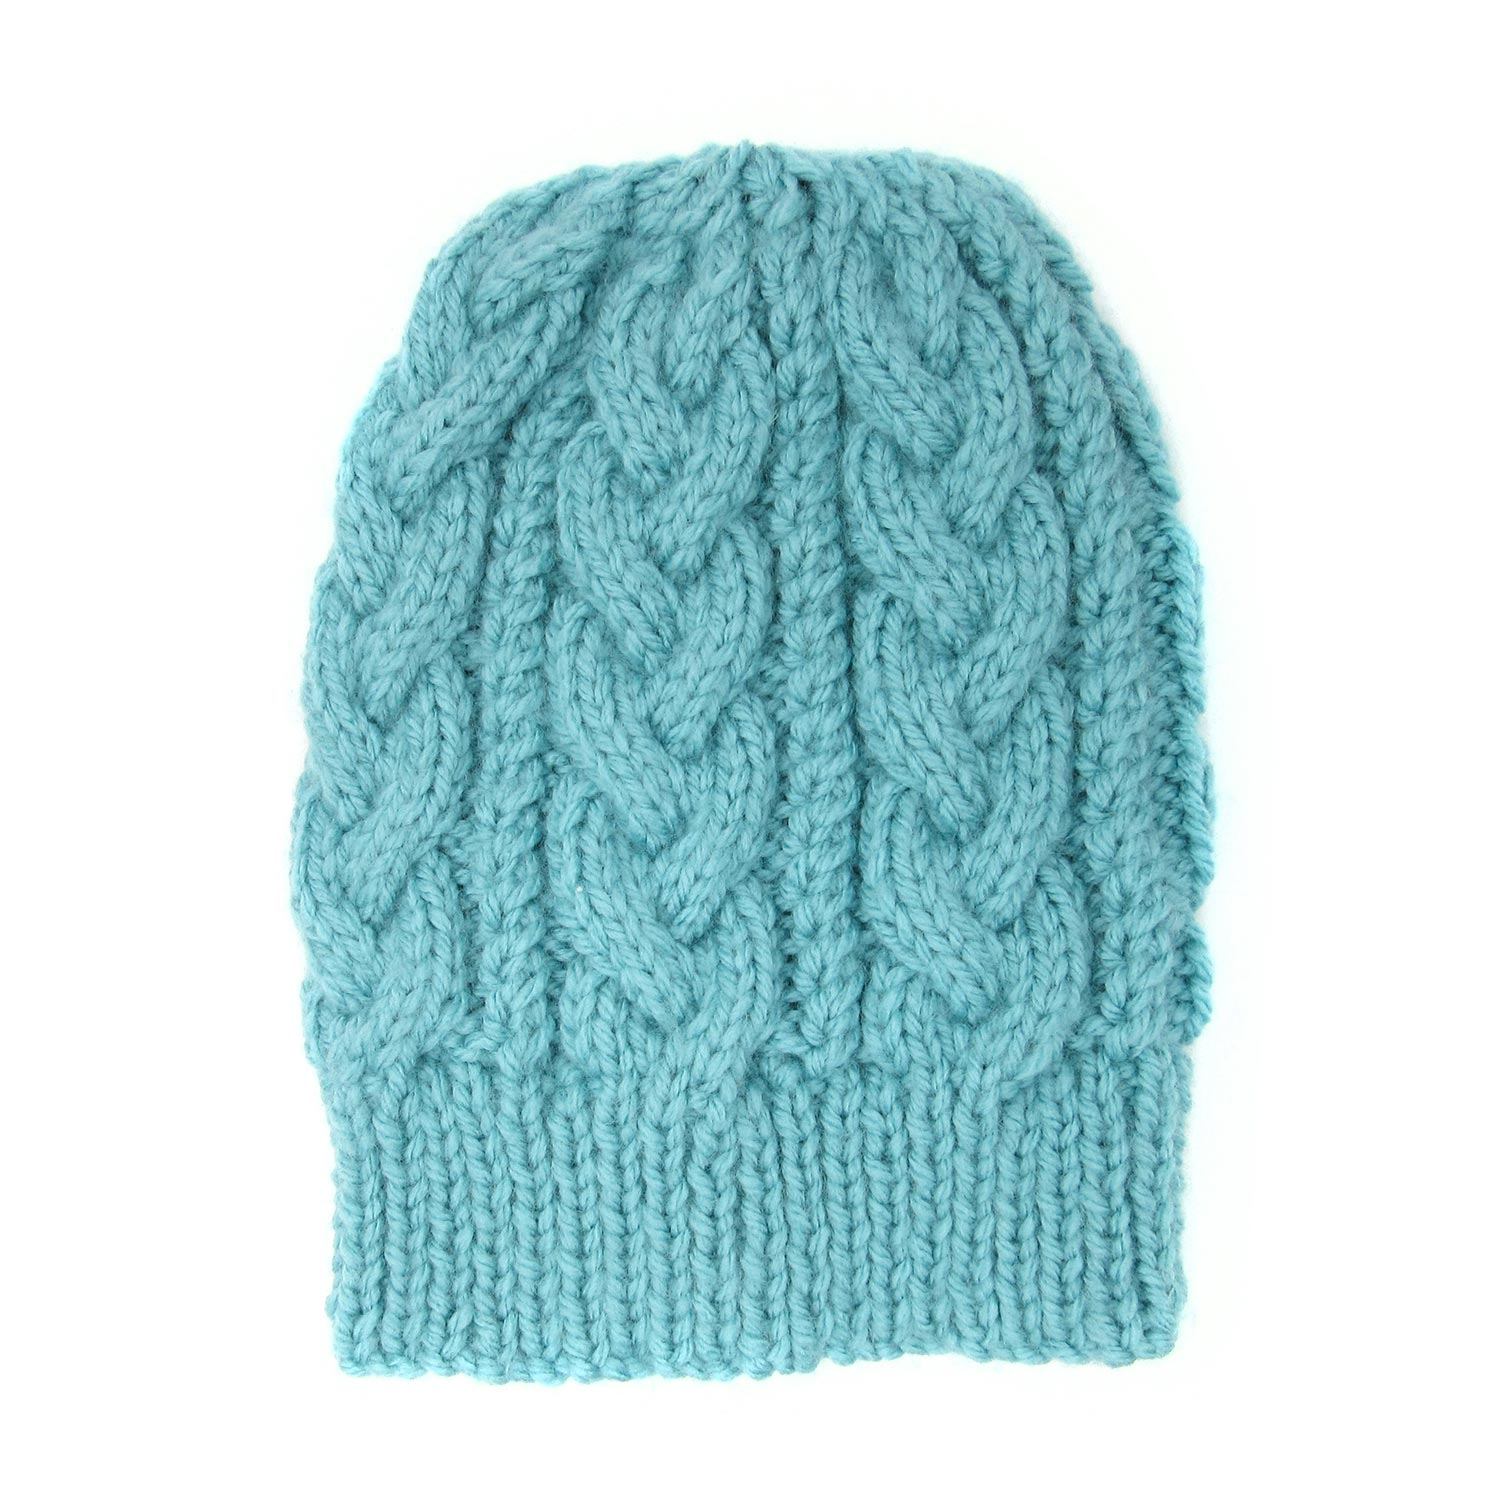 Simply Karoo Cable Knit Beanies Headwear Simply Karoo turquoise 